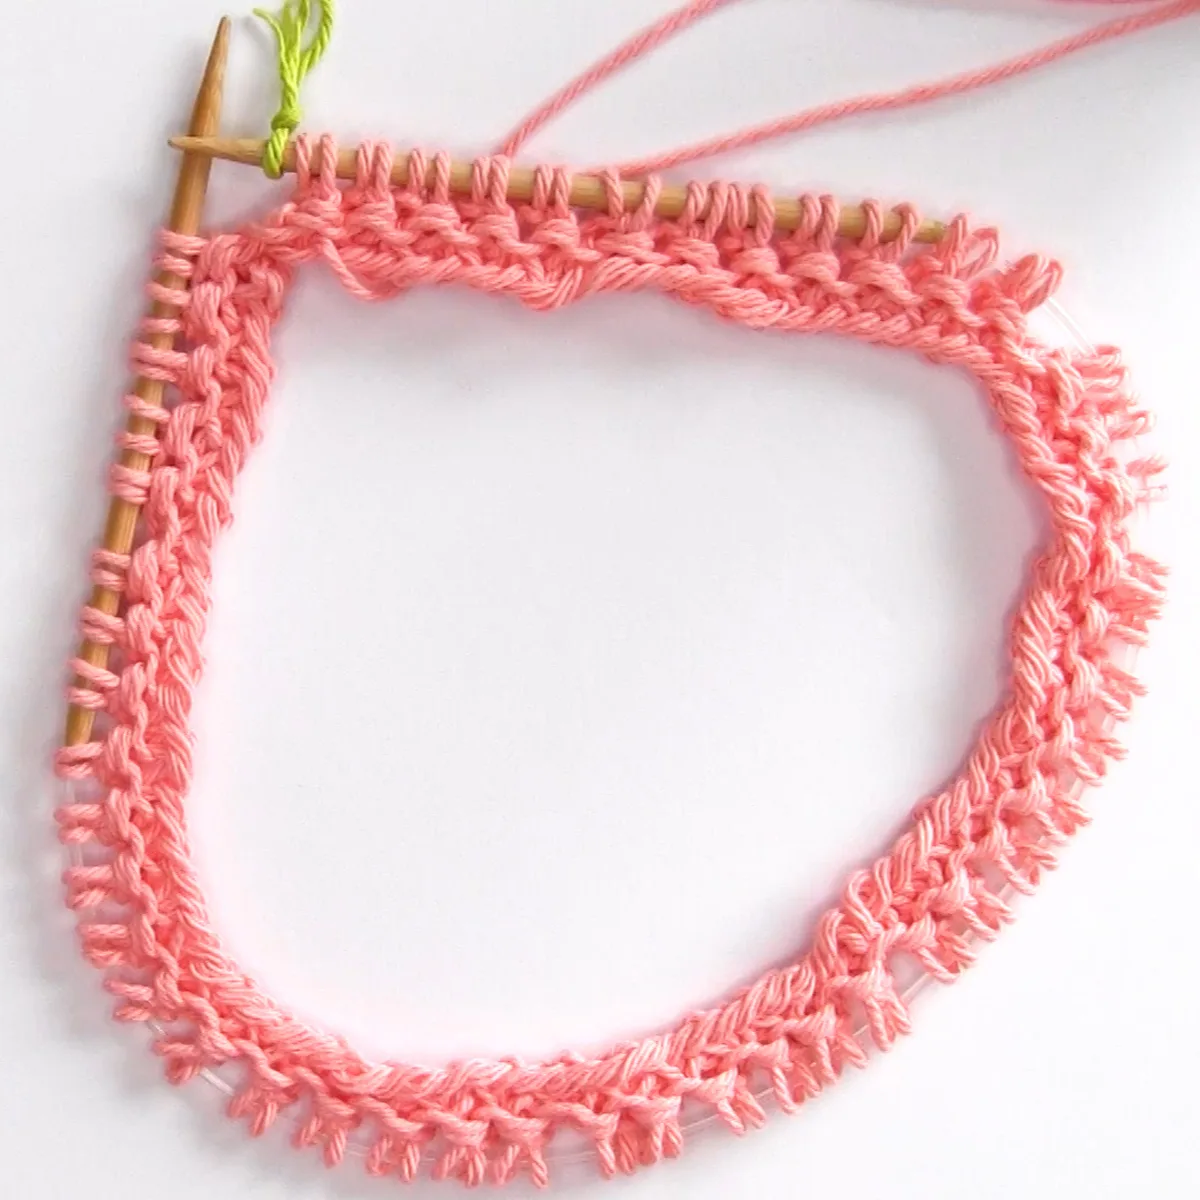 Granite stitch on circular knitting needle in orange color yarn.